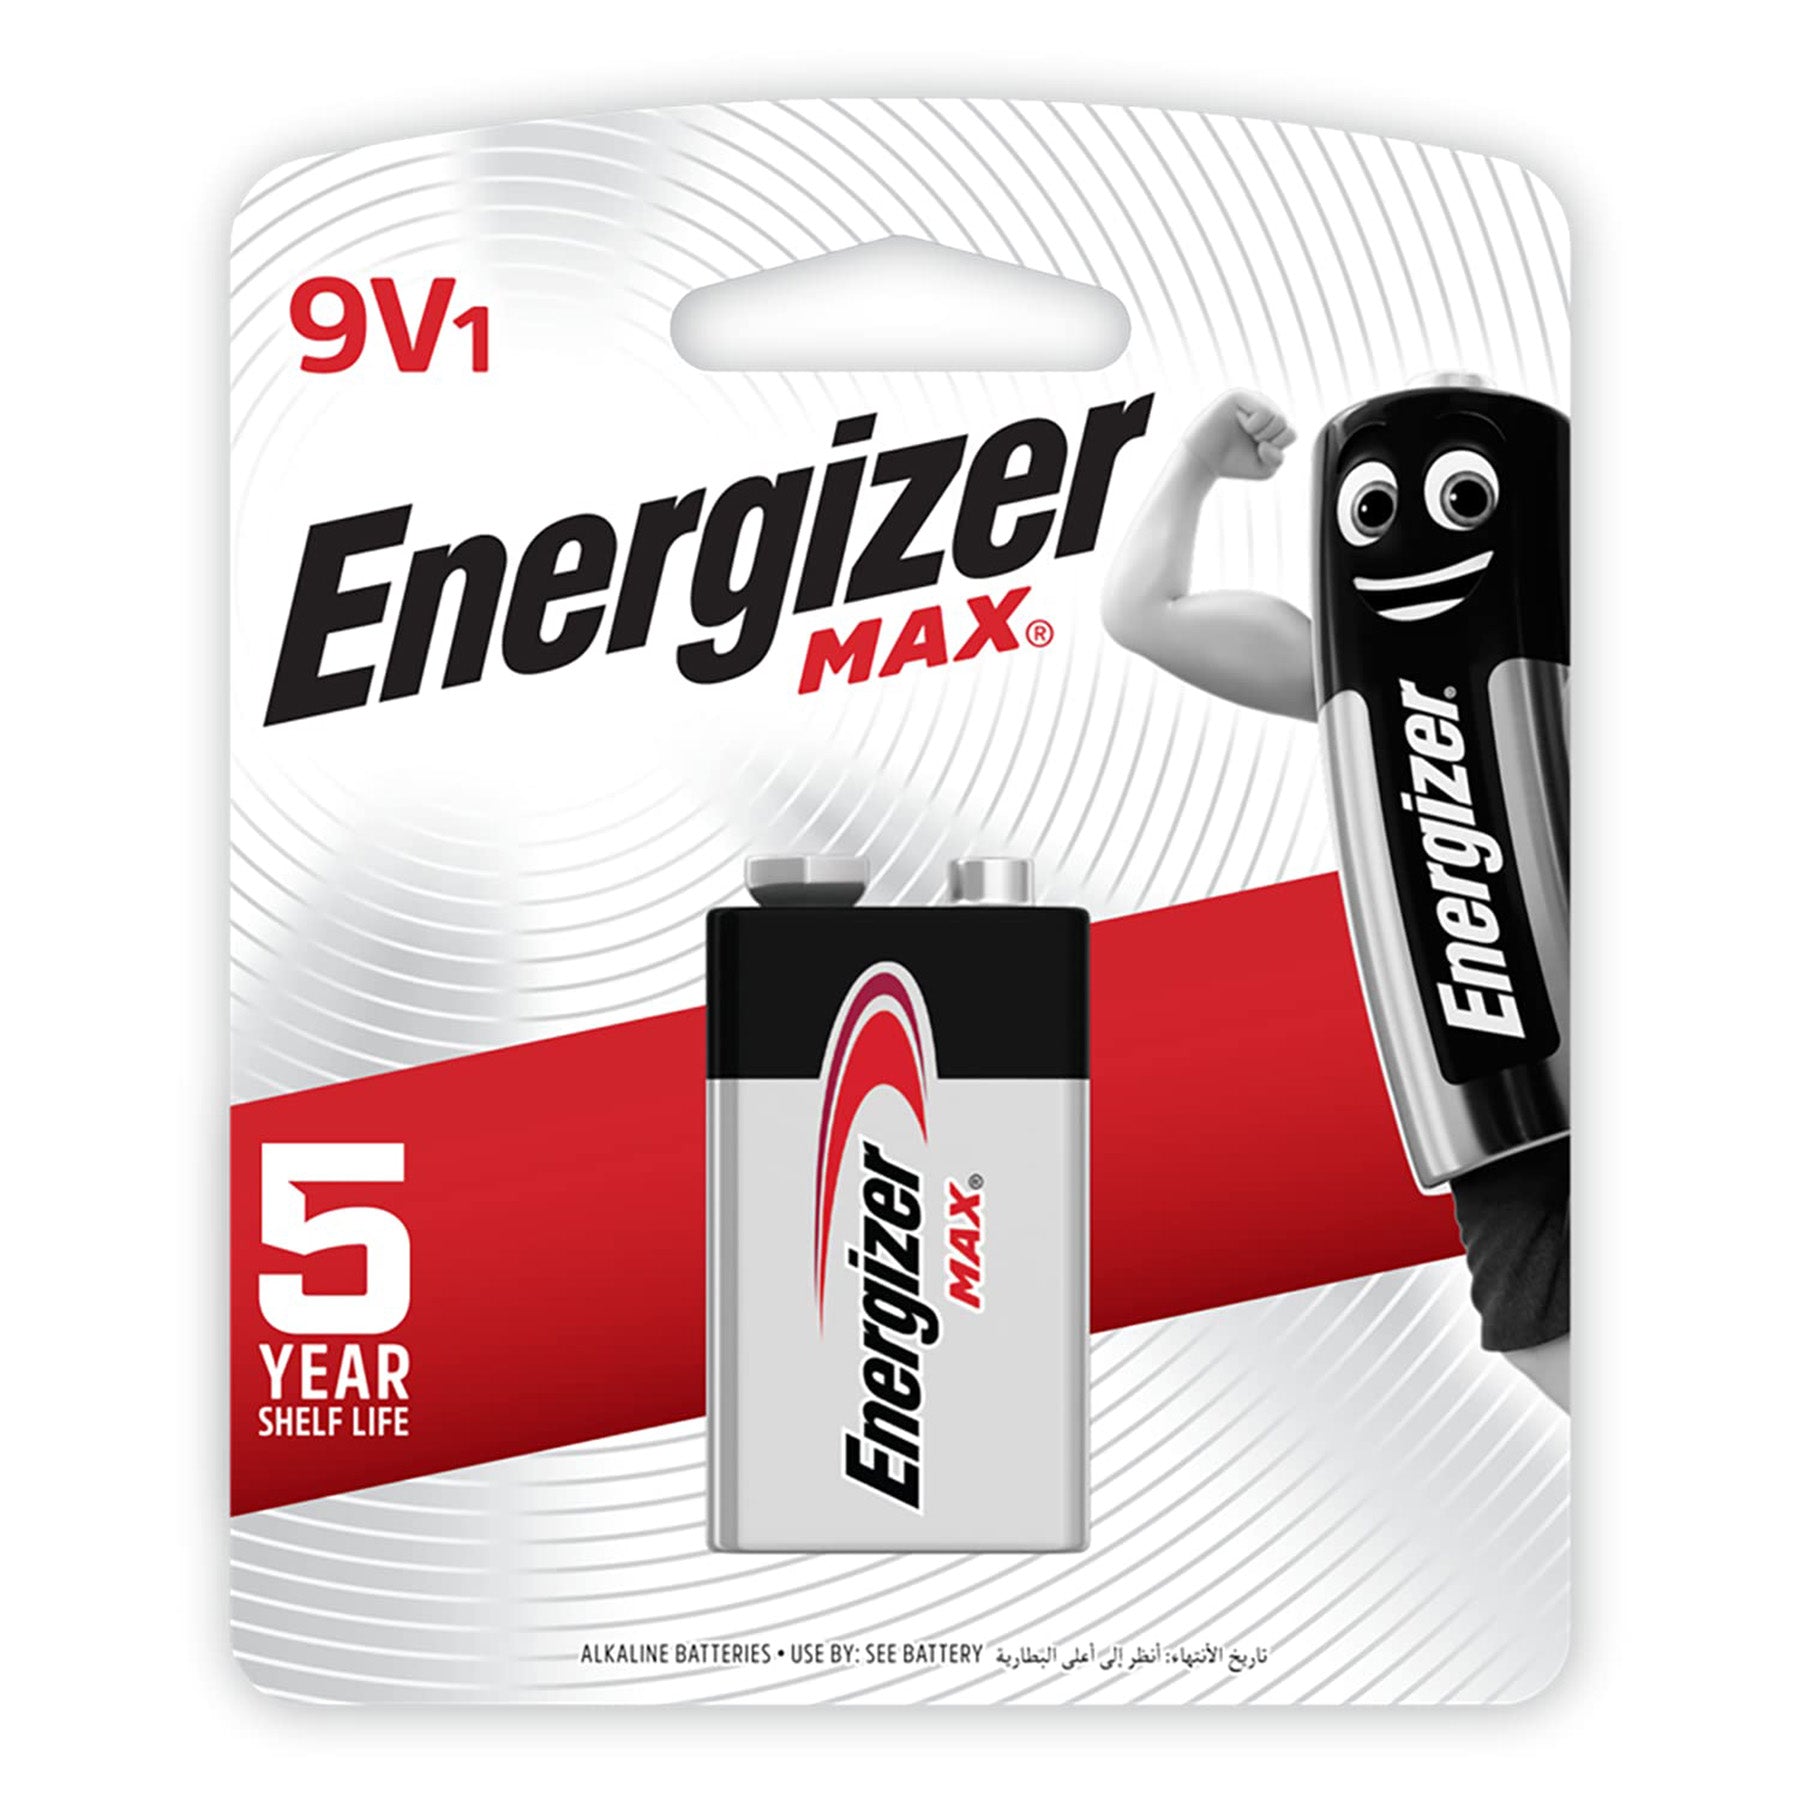 Energizer 9V Batteries - 1 PcQuantity: 1 Pc